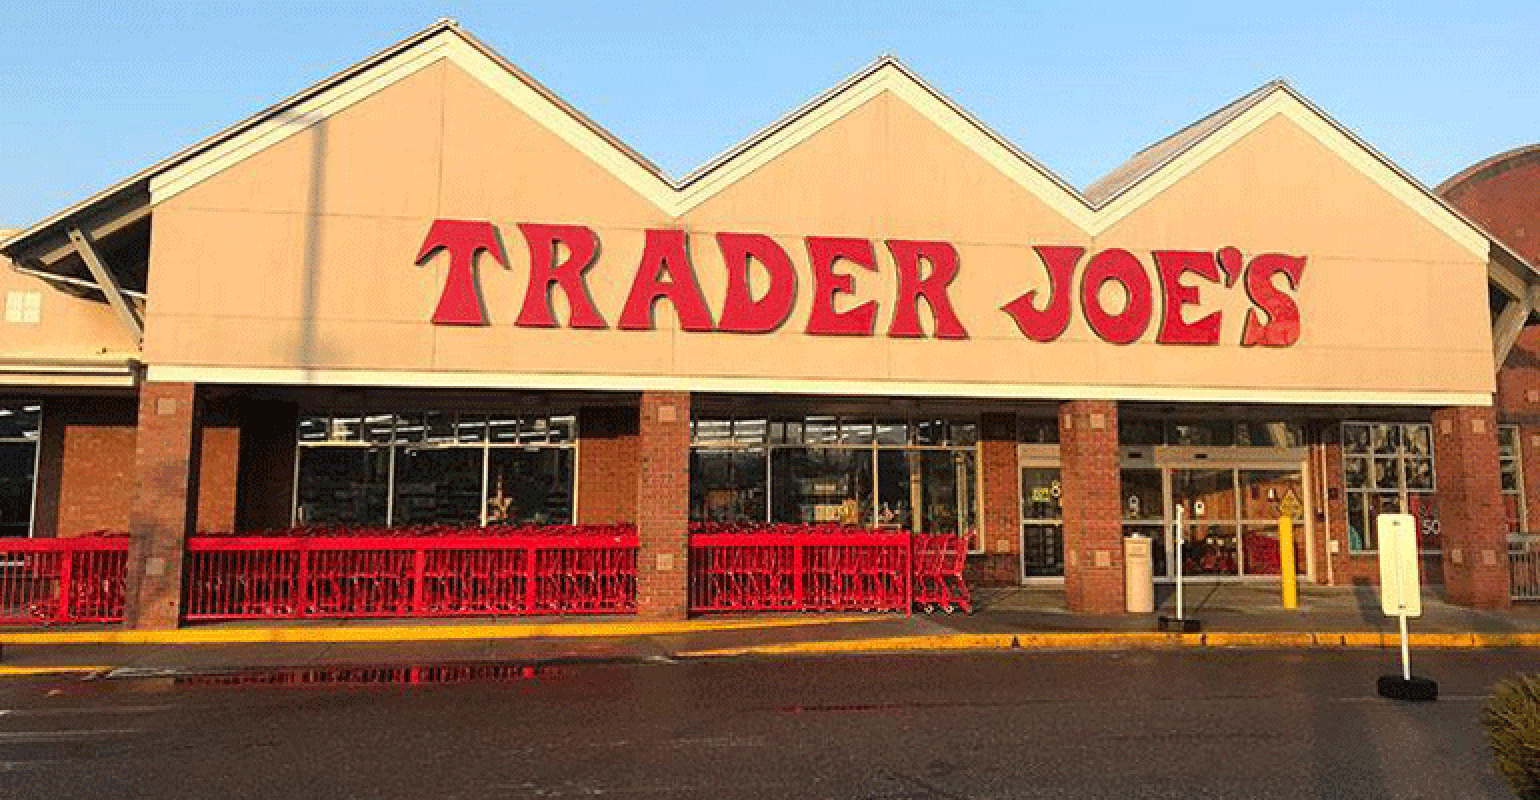 Trader Joe's takes top spot on grocery retailer ranking